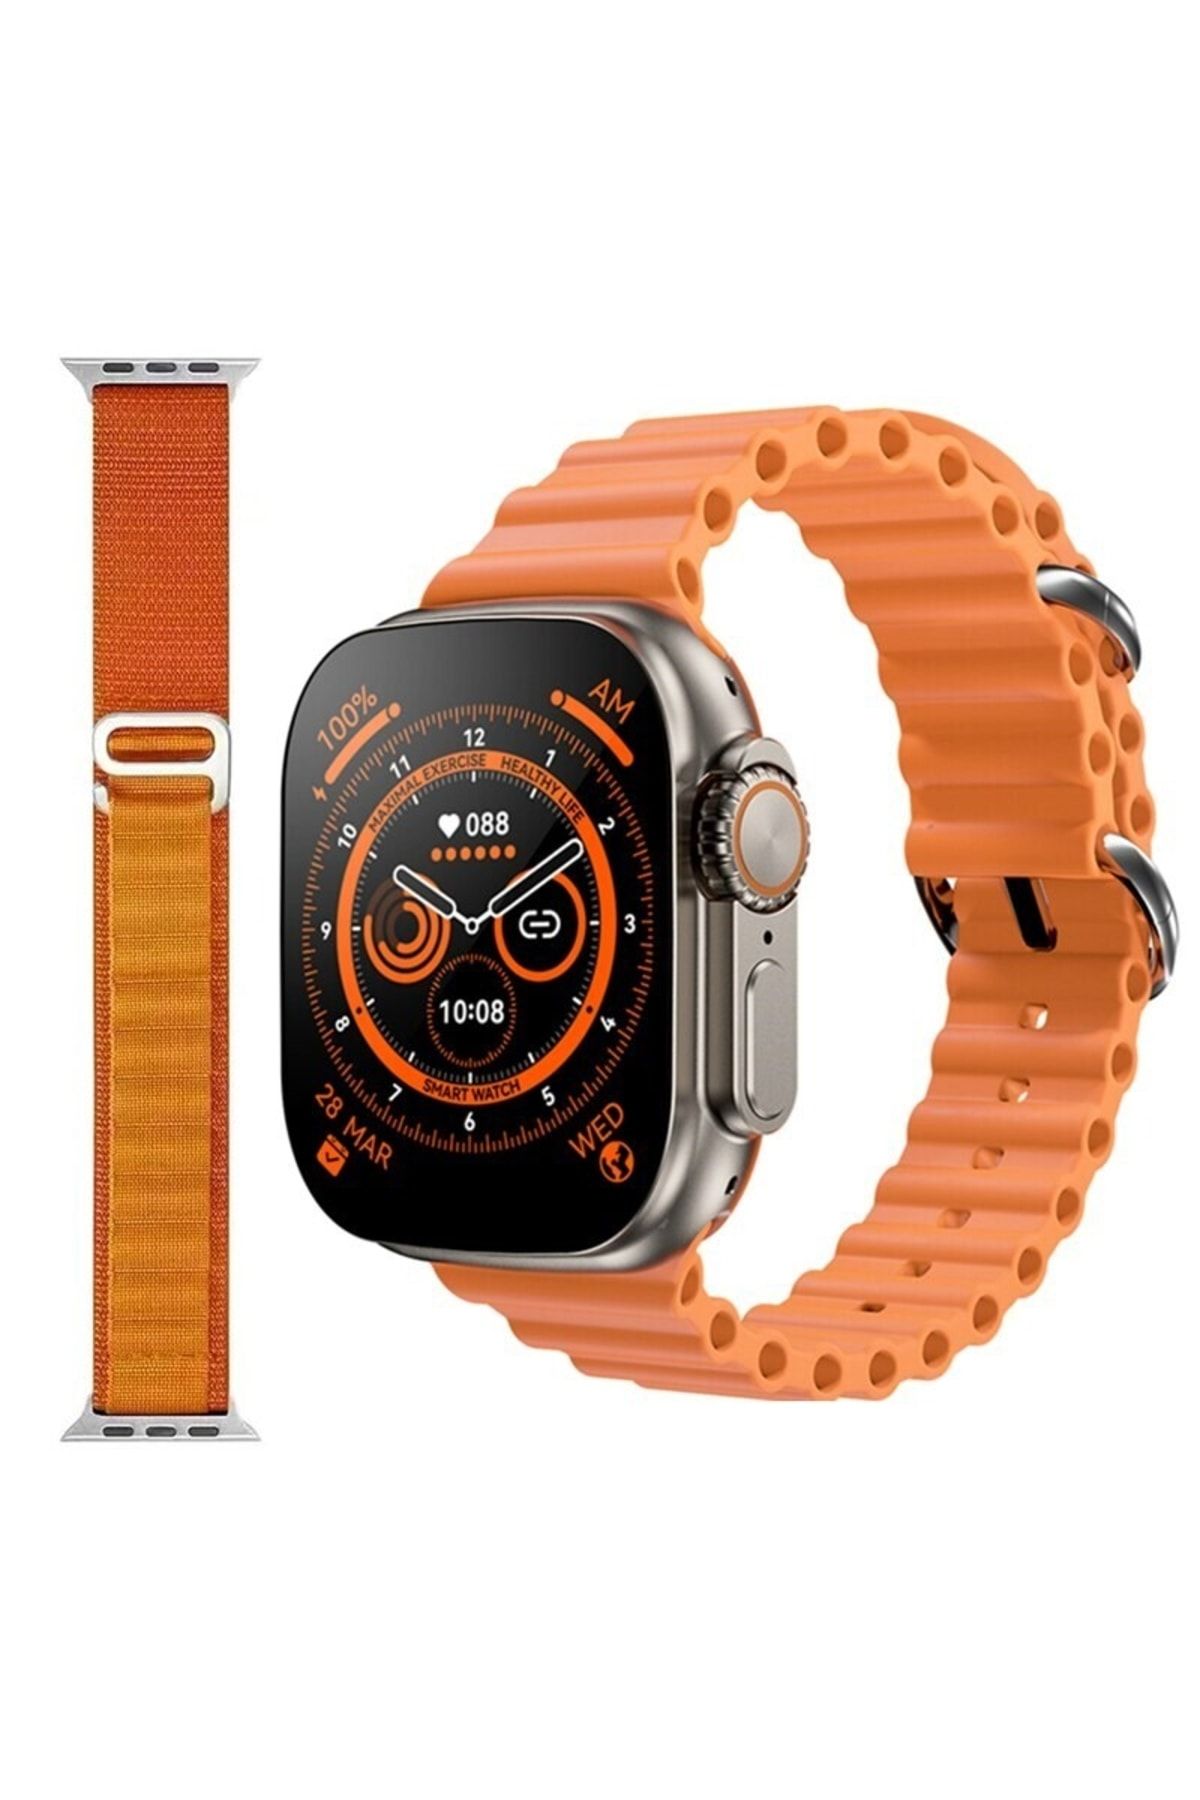 pazariz Gs8 Watch 8 Ultra Akıllı Saat Turuncu Türkçe Watch 2.02 Inc Turuncu Bez Kordon Hediye